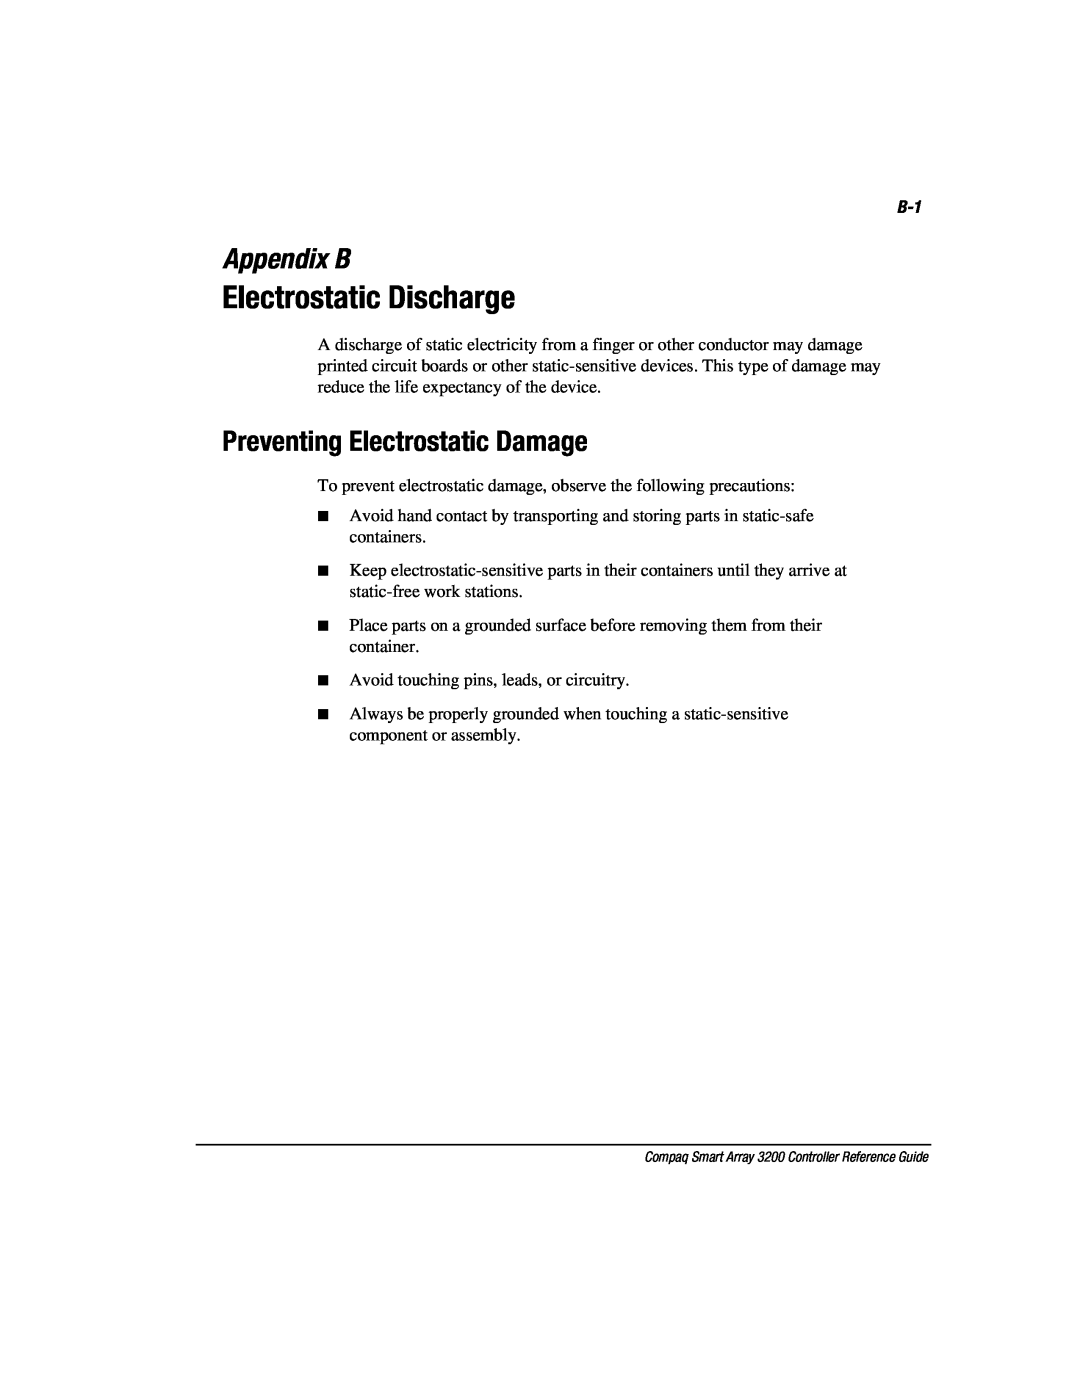 Compaq 3200 manual Electrostatic Discharge, Appendix B, Preventing Electrostatic Damage 